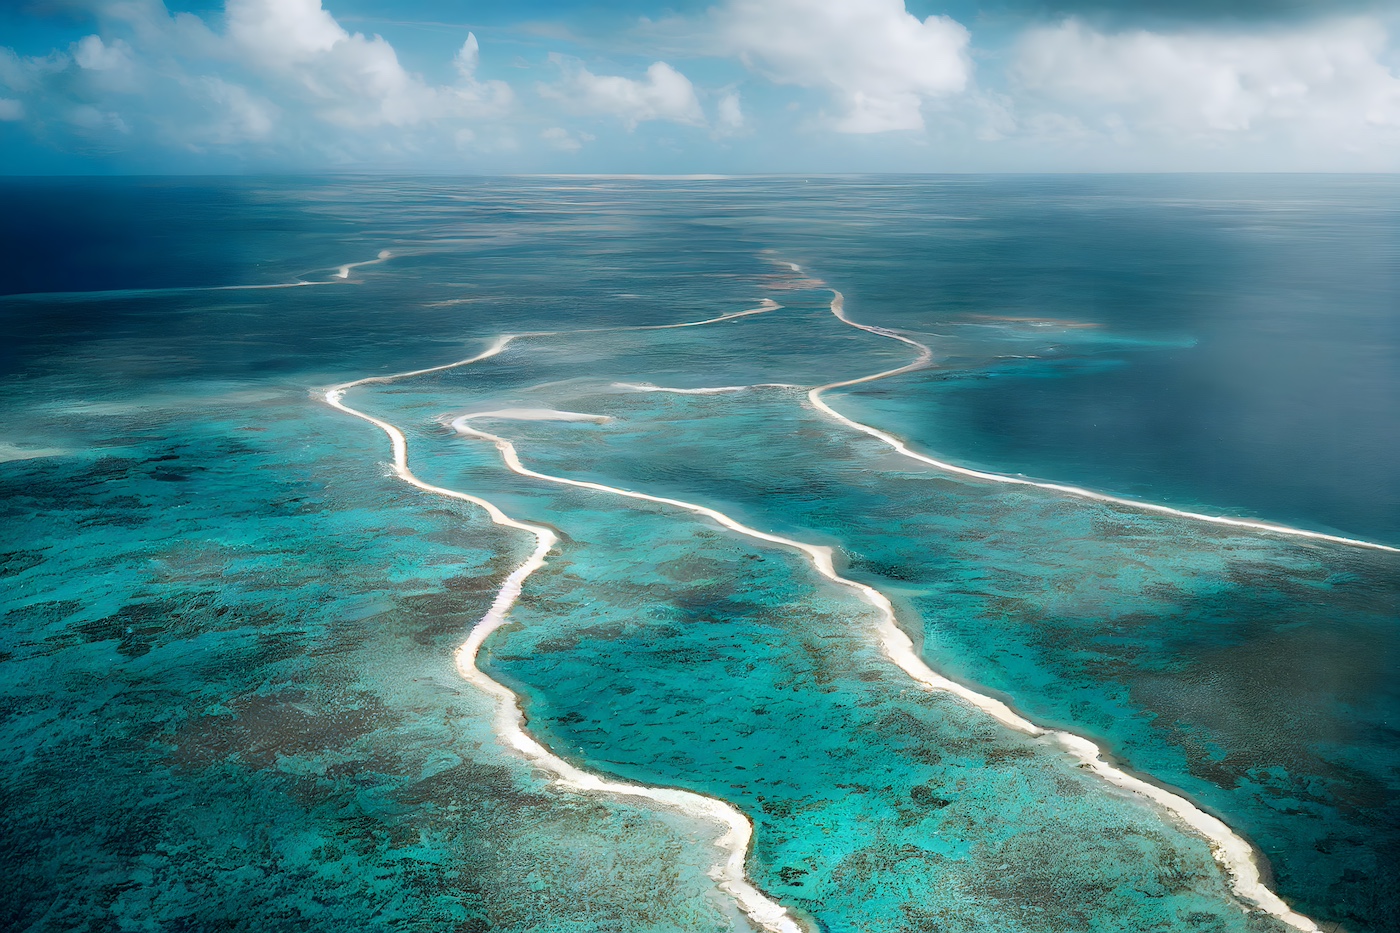 Verenigde Staten Bikini atol onbewoonbaar kernproef